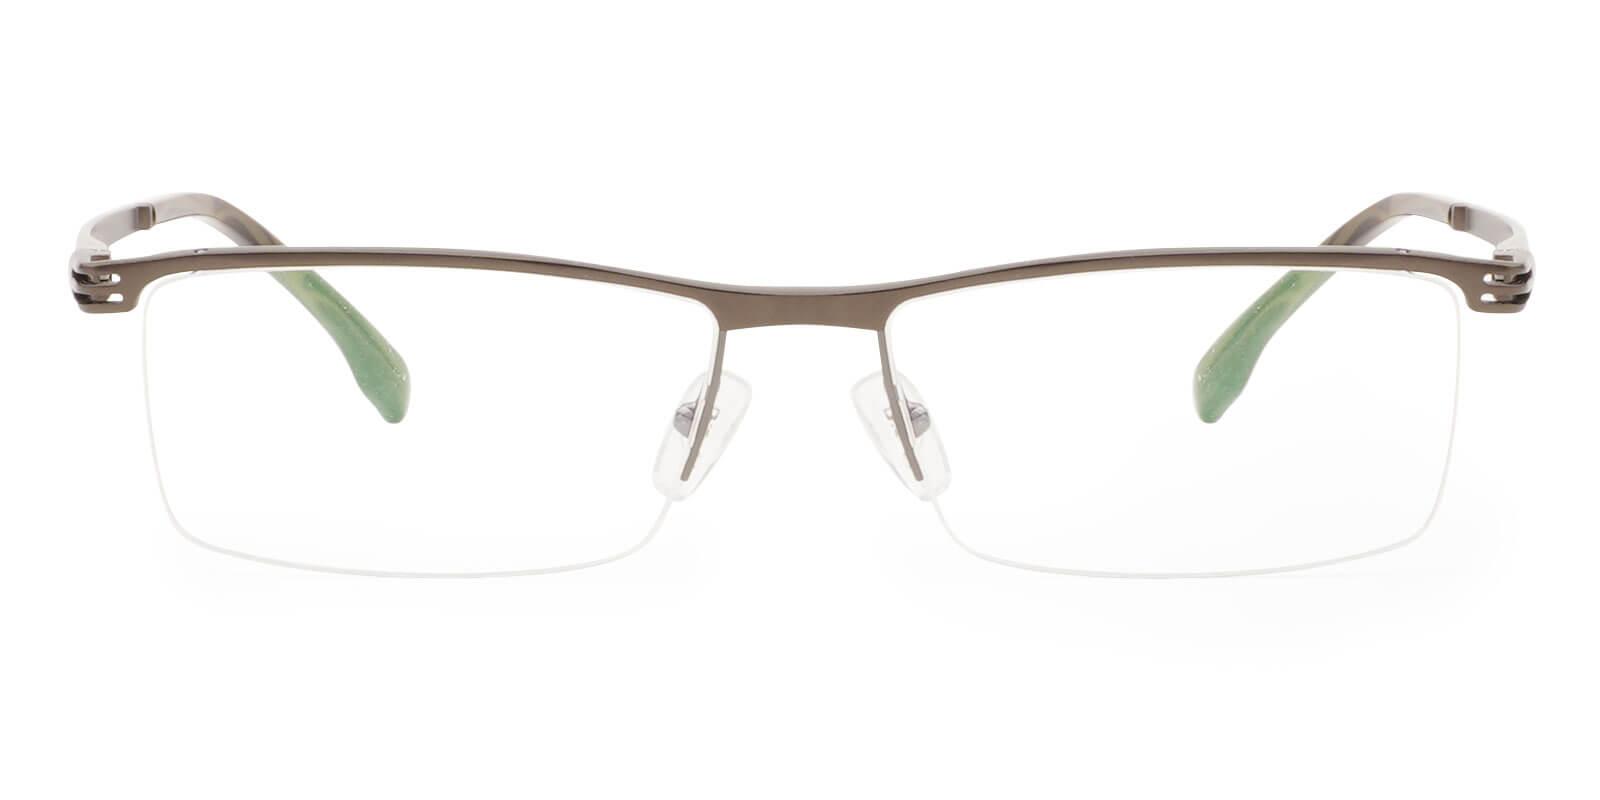 Matthew Brown Metal Eyeglasses , NosePads Frames from ABBE Glasses